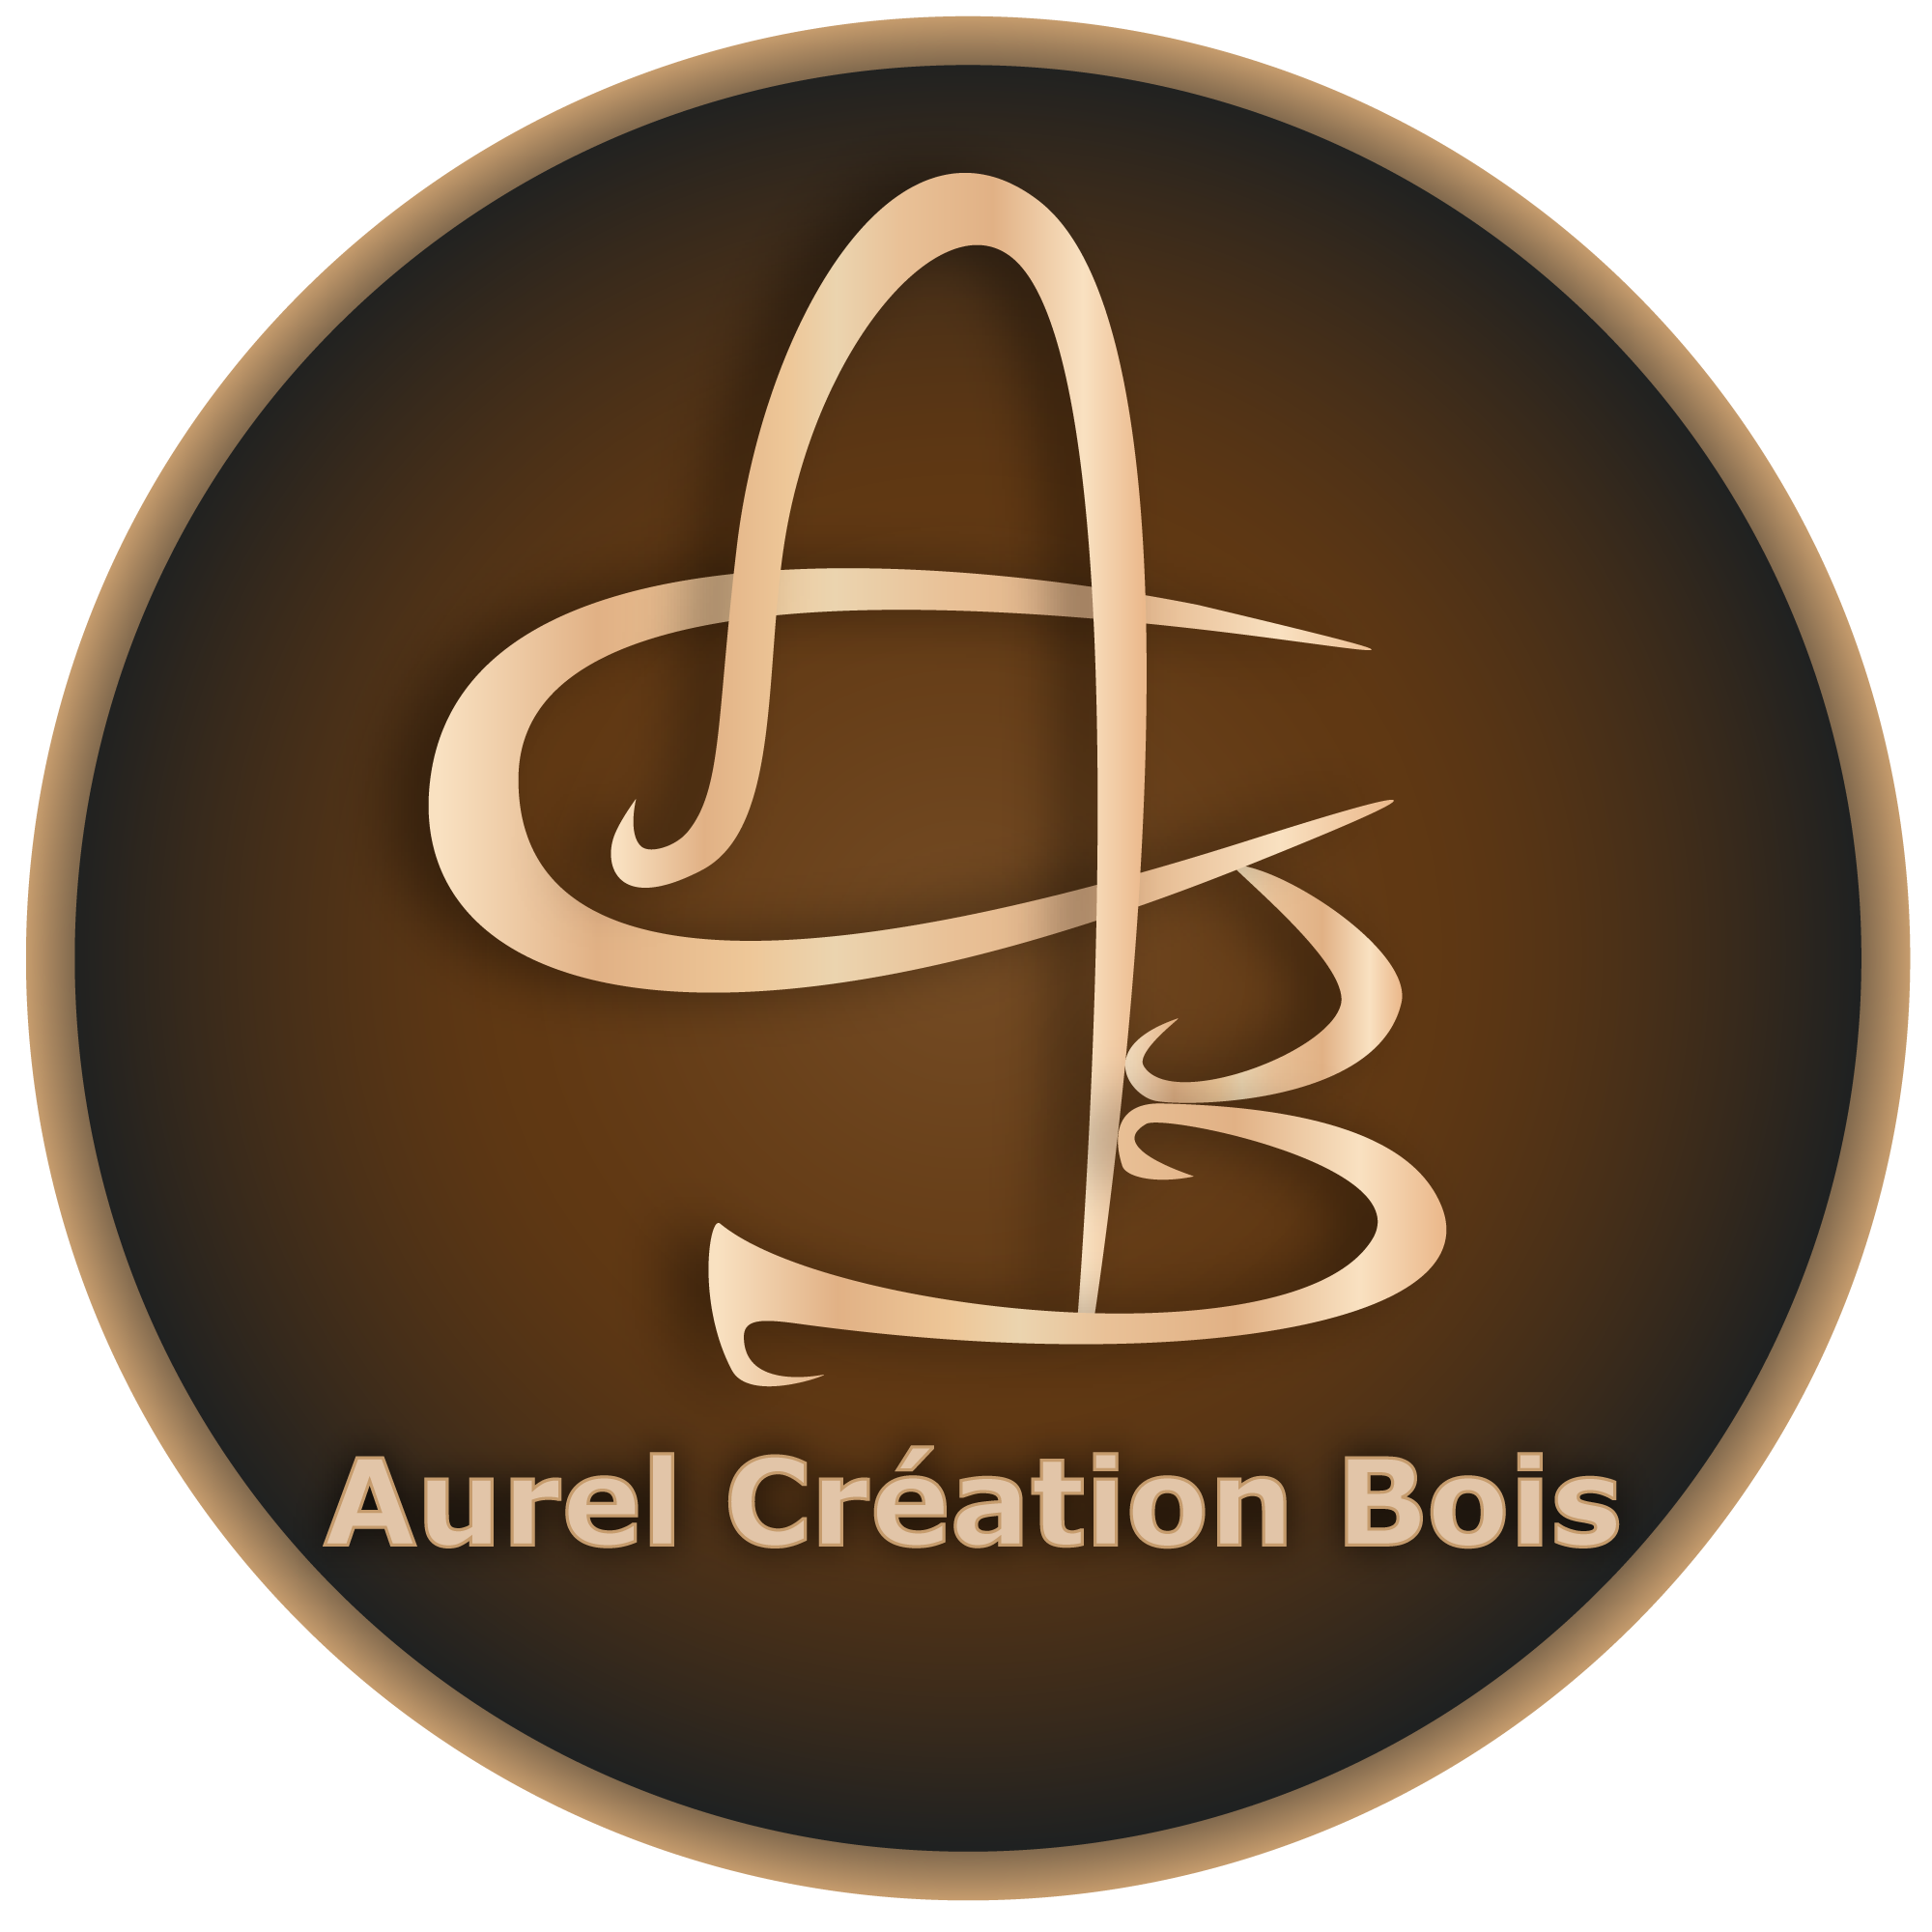 Aurel Creation Bois